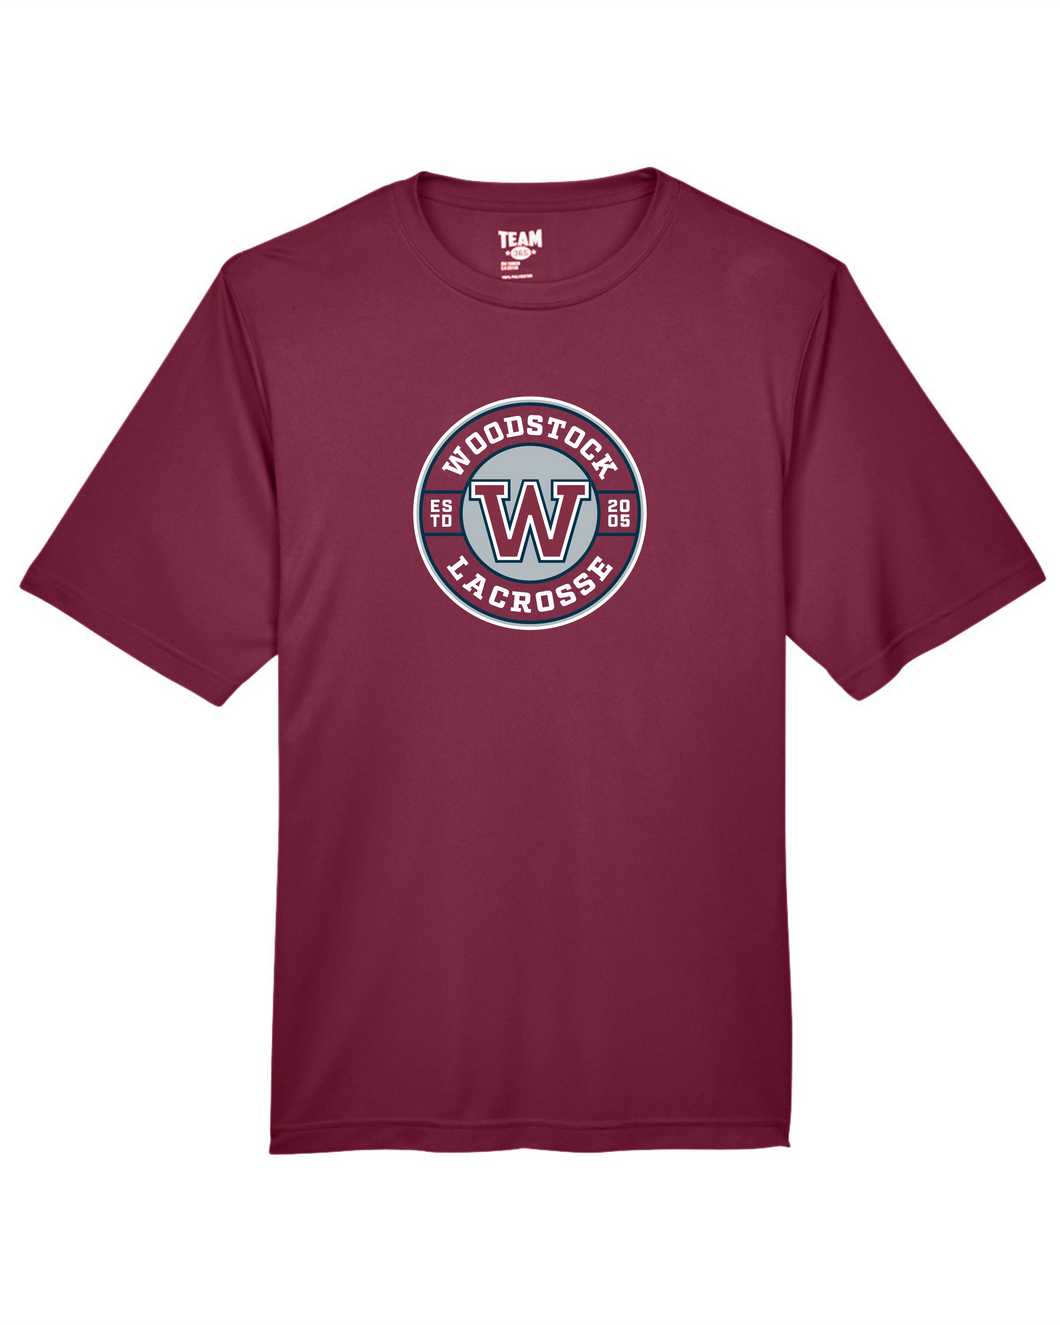 WW-LAX-623-2 - Team 365 Zone Performance Short Sleeve T-Shirt - Woodstock W LAX Logo